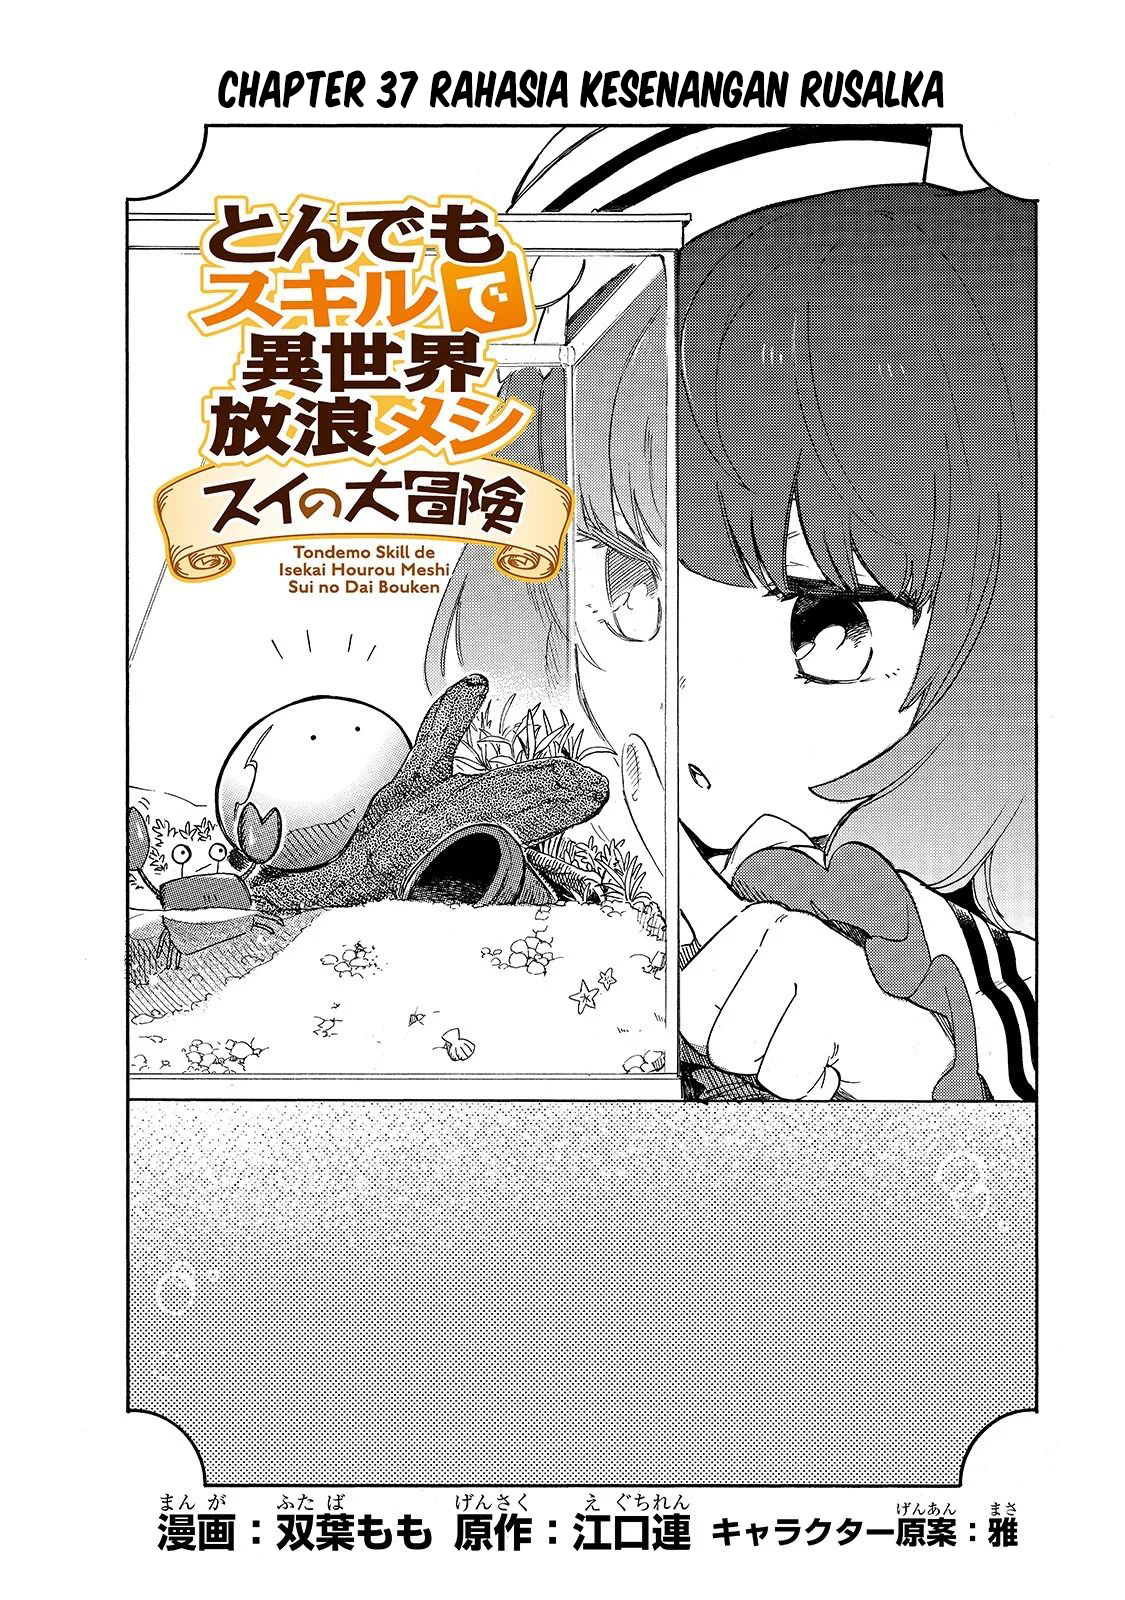 Tondemo Skill de Isekai Hourou Meshi: Sui no Daibouken Chapter 37